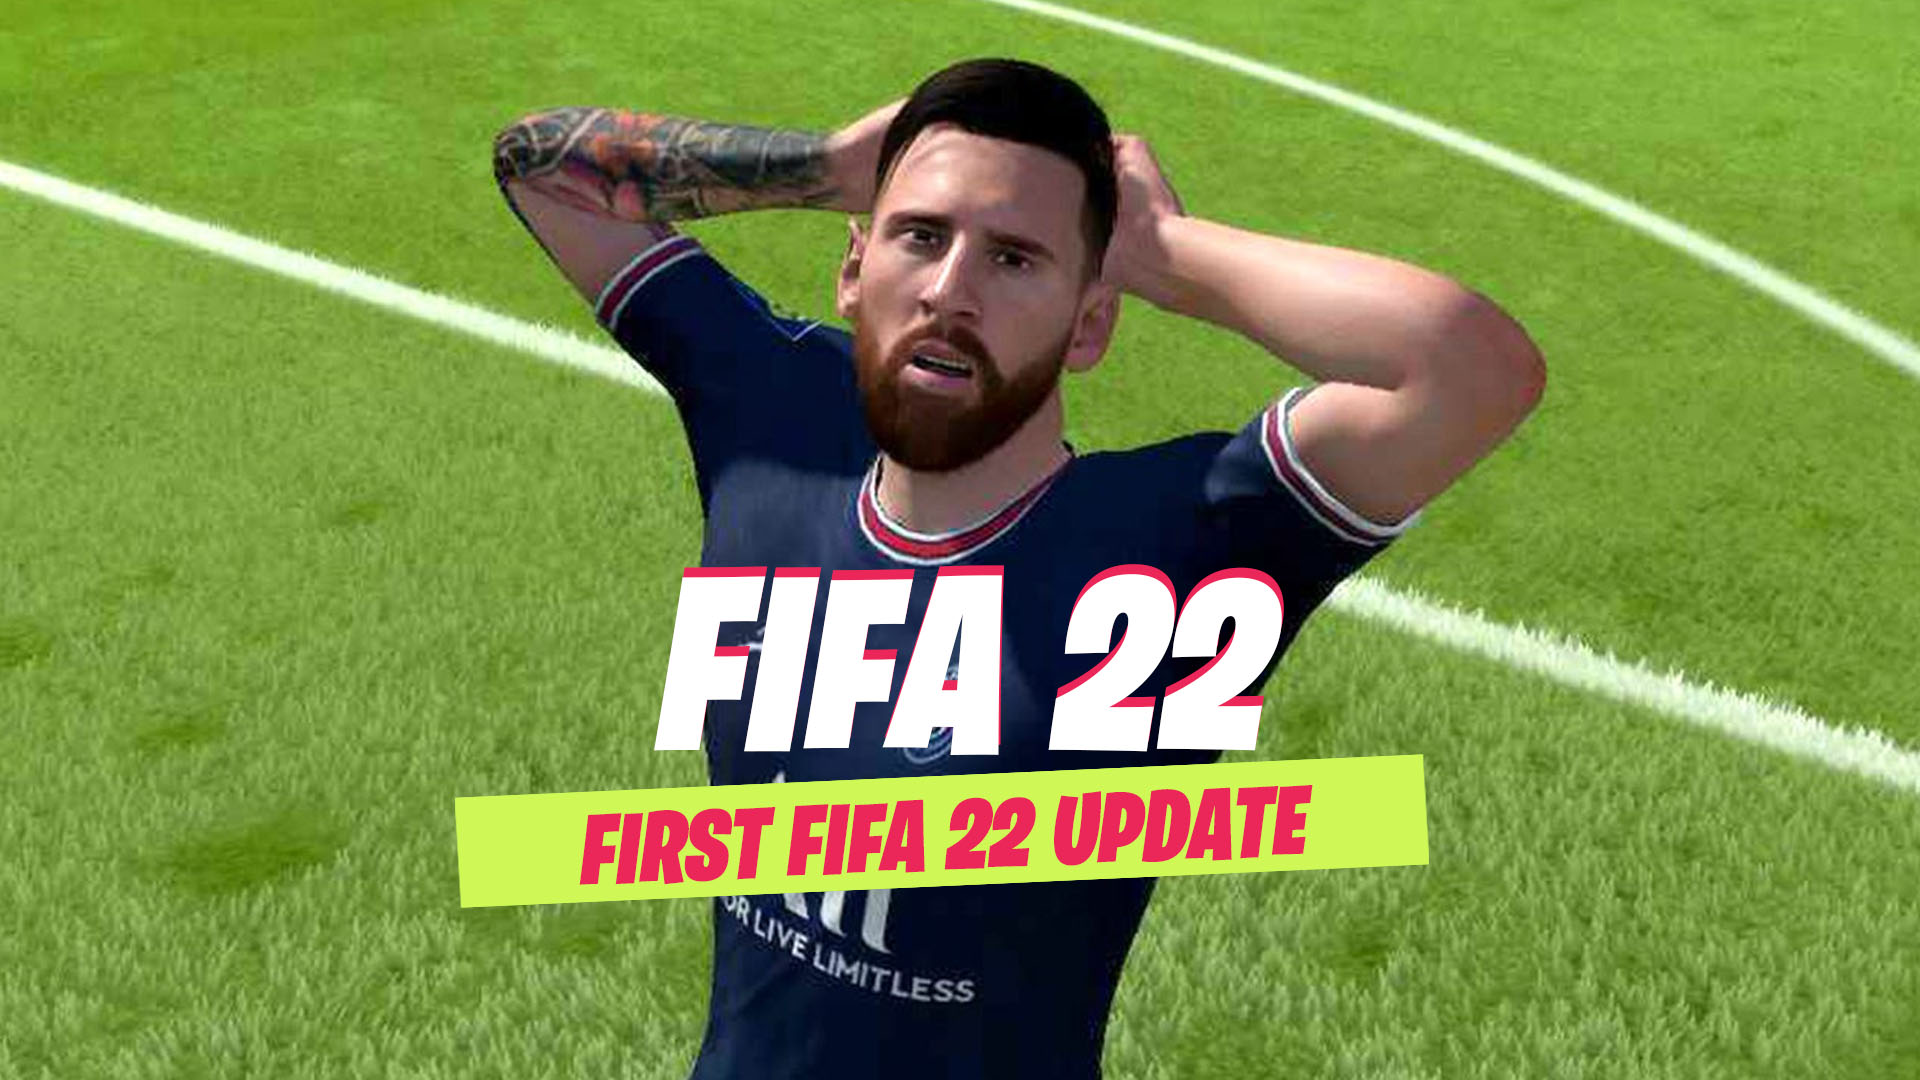 First FIFA 22 update